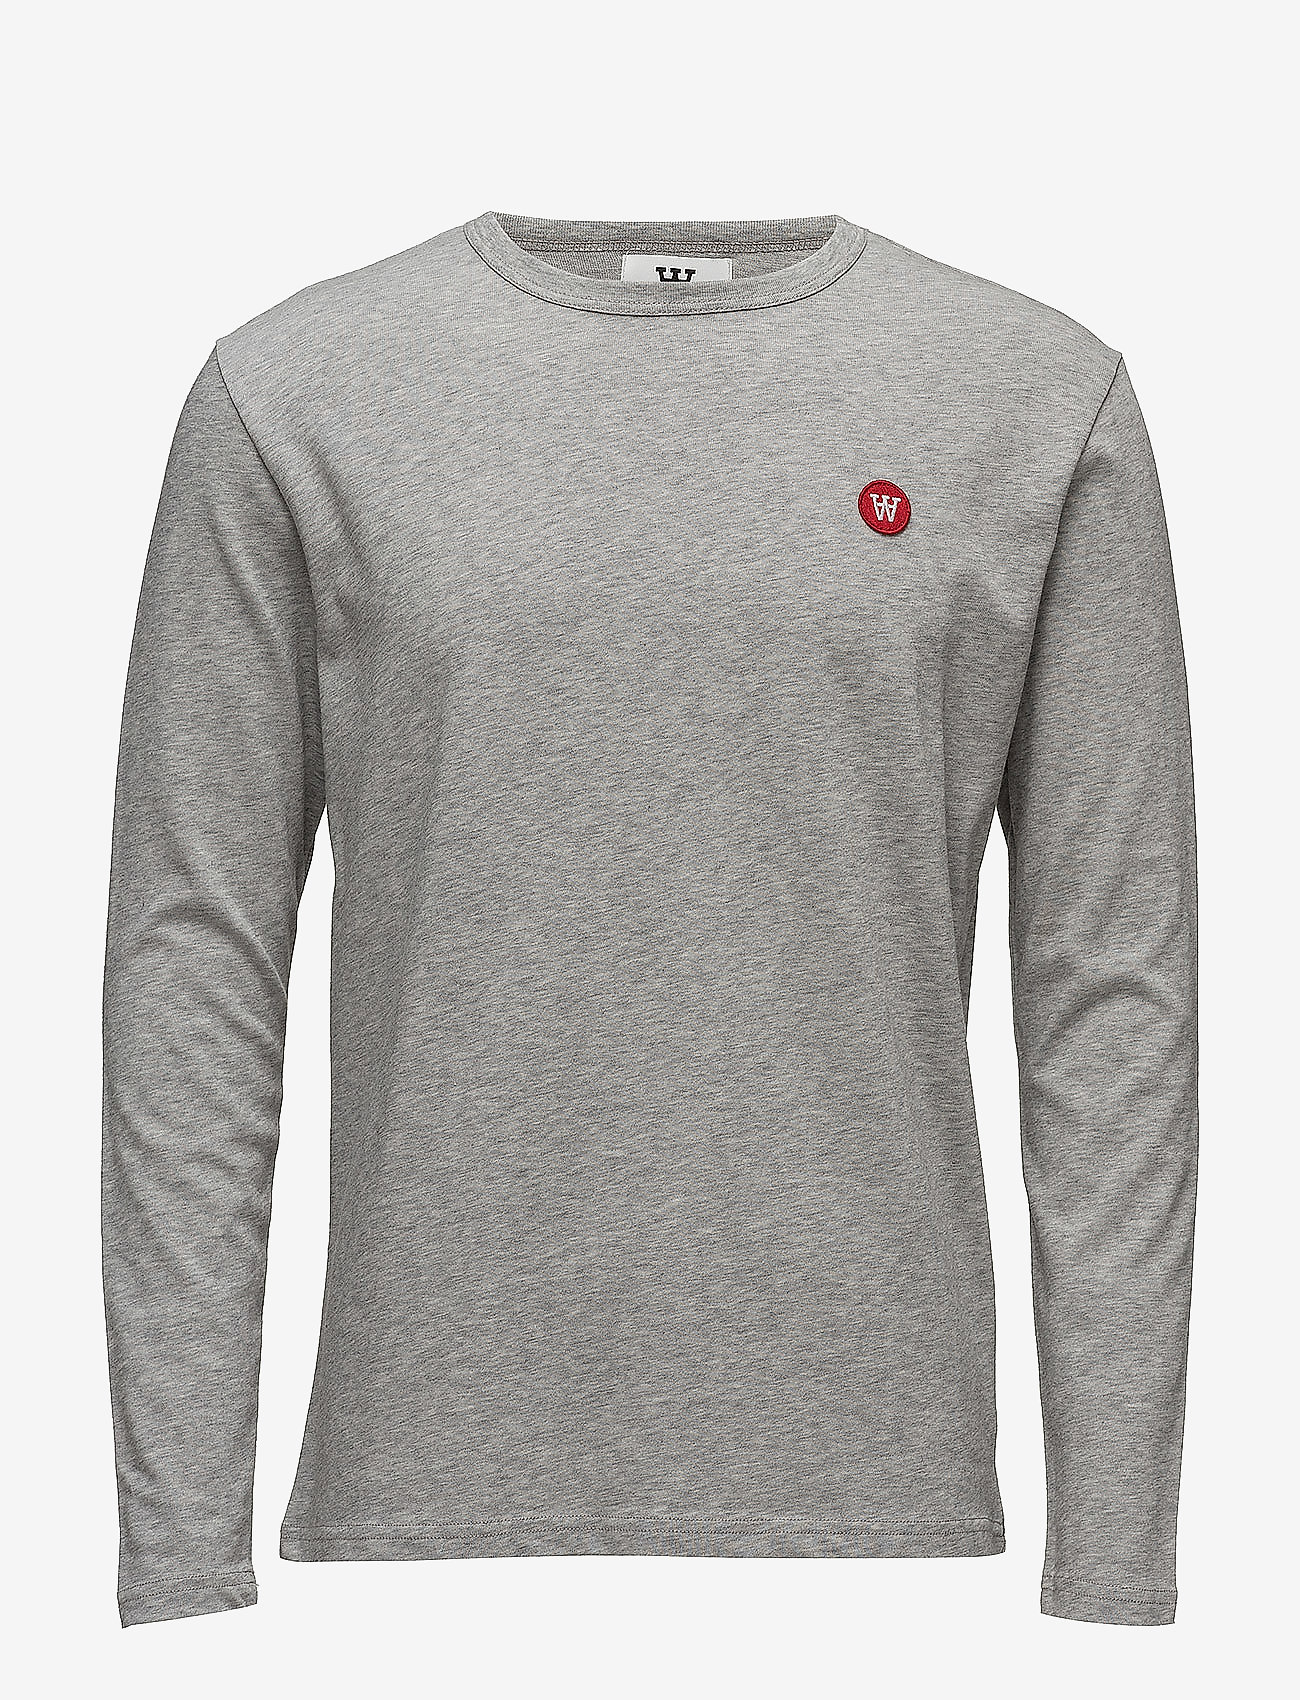 Double A by Wood Wood - Mel long sleeve - t-shirts - grey melange - 0